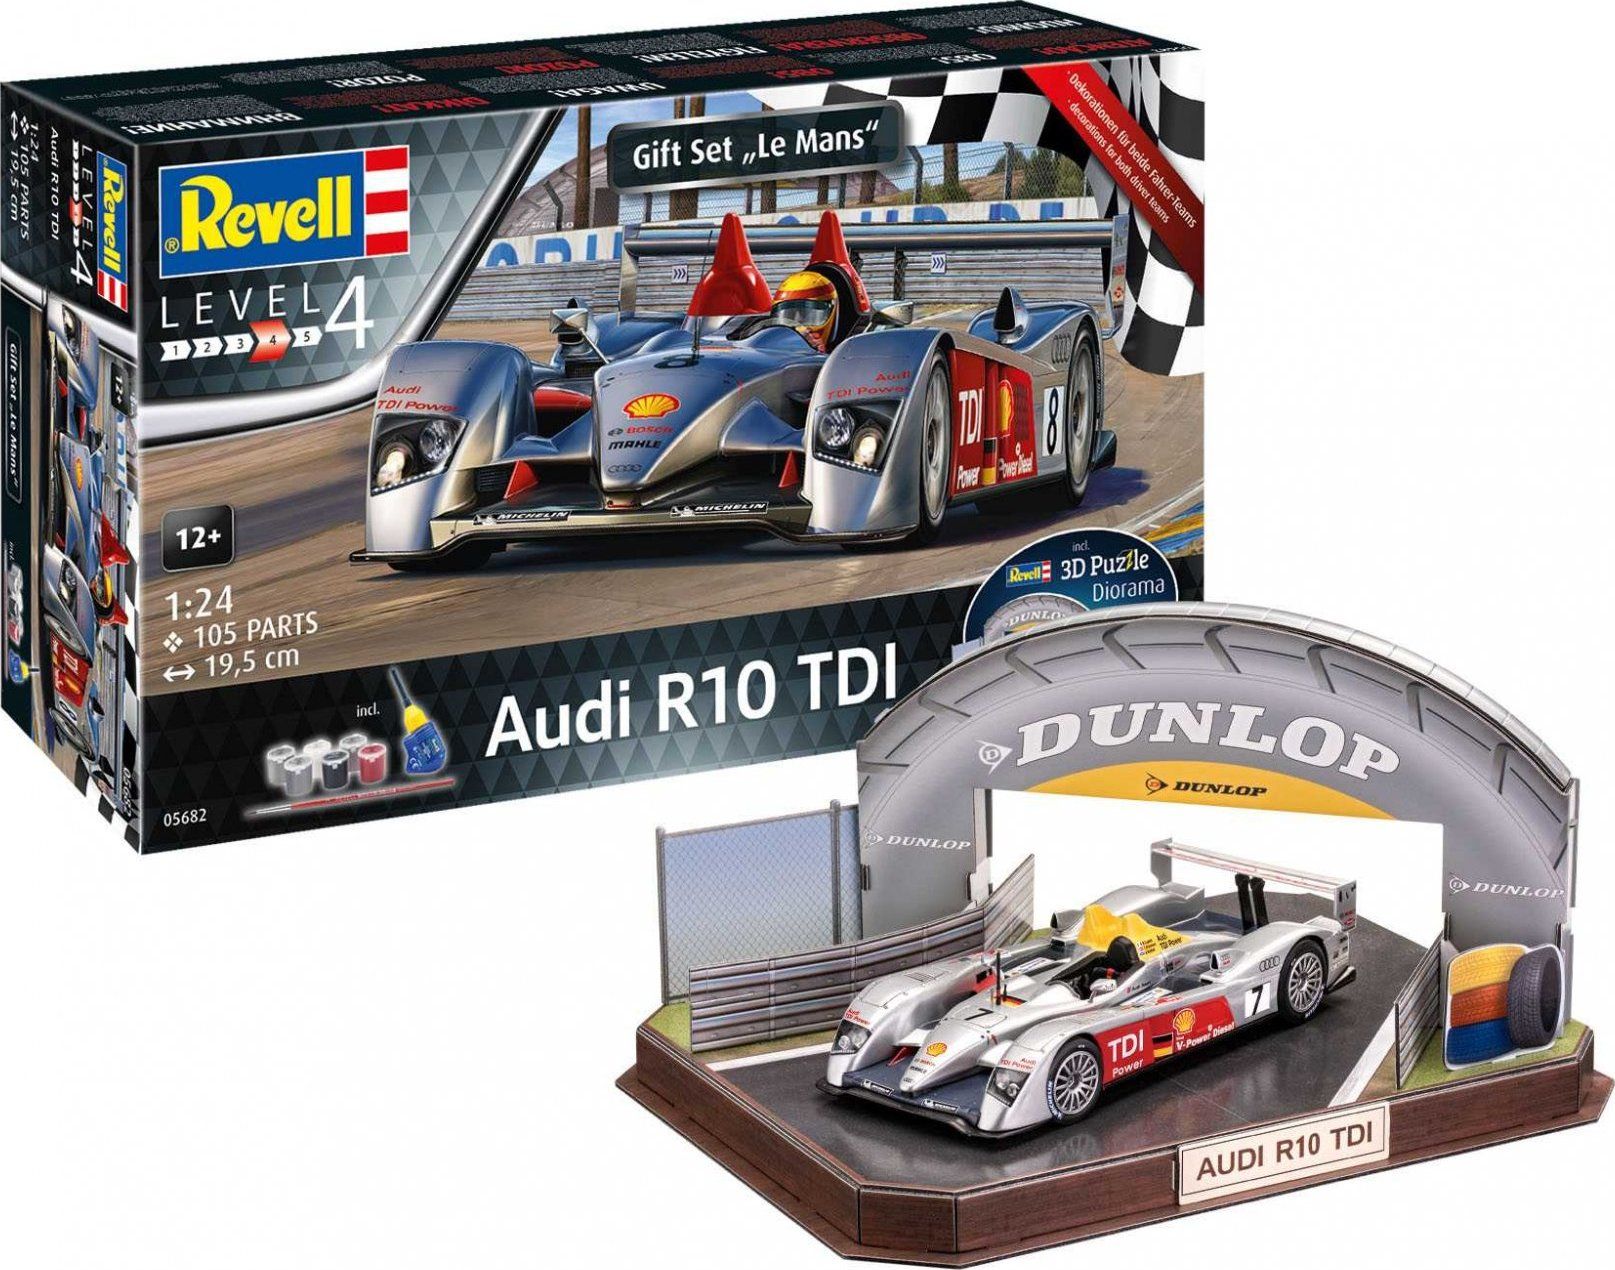 REVELL Gift-Set diorama 05682 - Audi R10 TDI + 3D Puzzle (LeMans Racetrack) (1:24) - obrázek 1